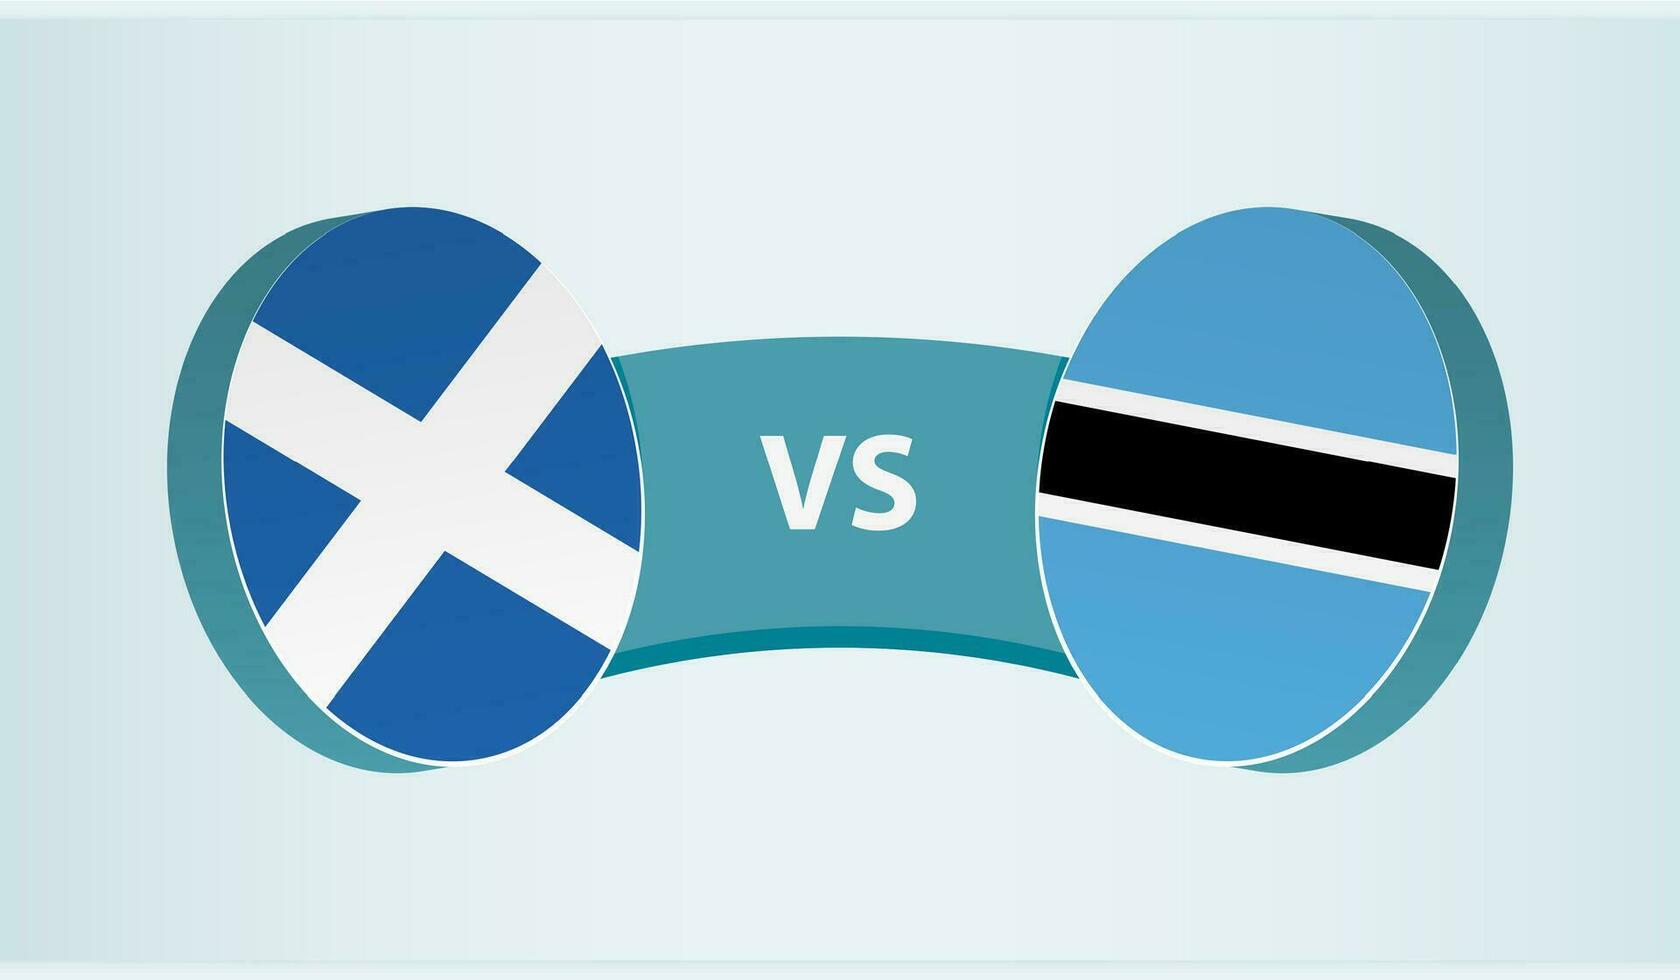 Scotland versus Botswana, team sports competition concept. vector